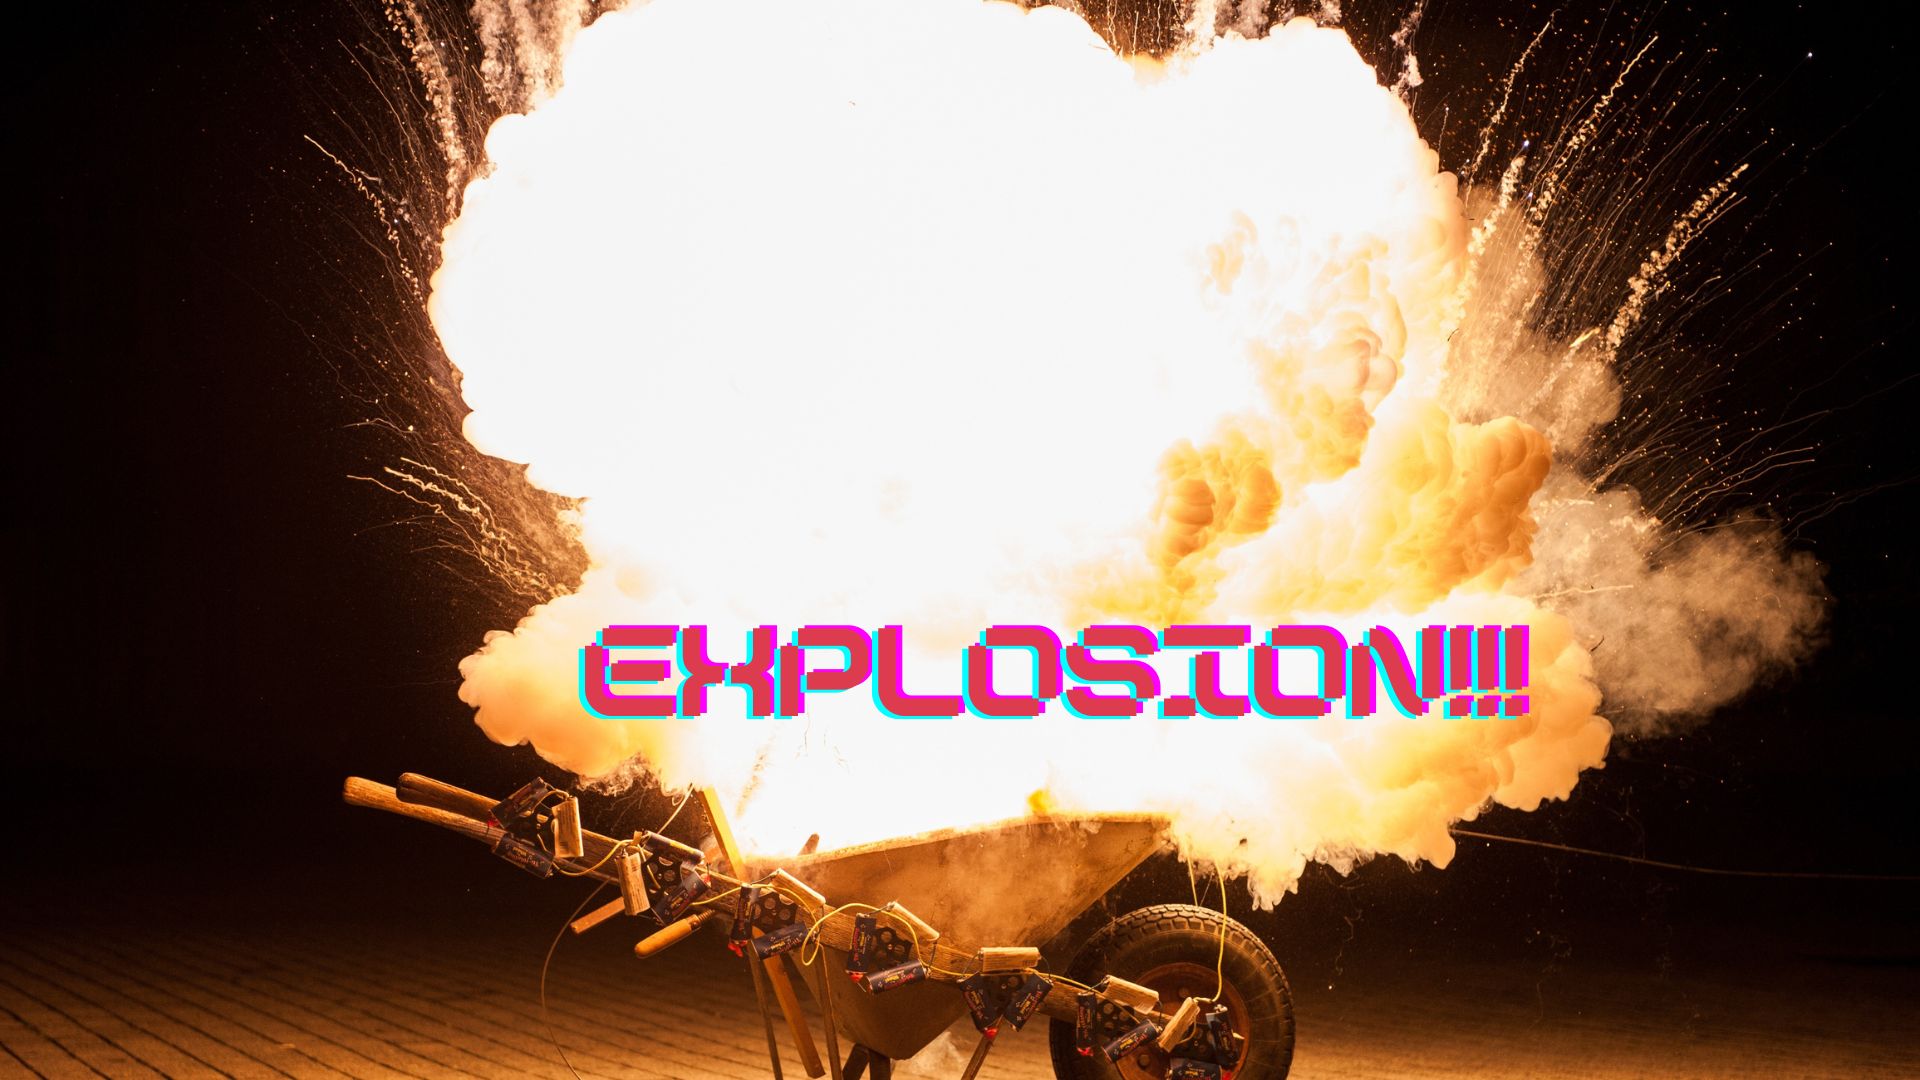 dust explosion